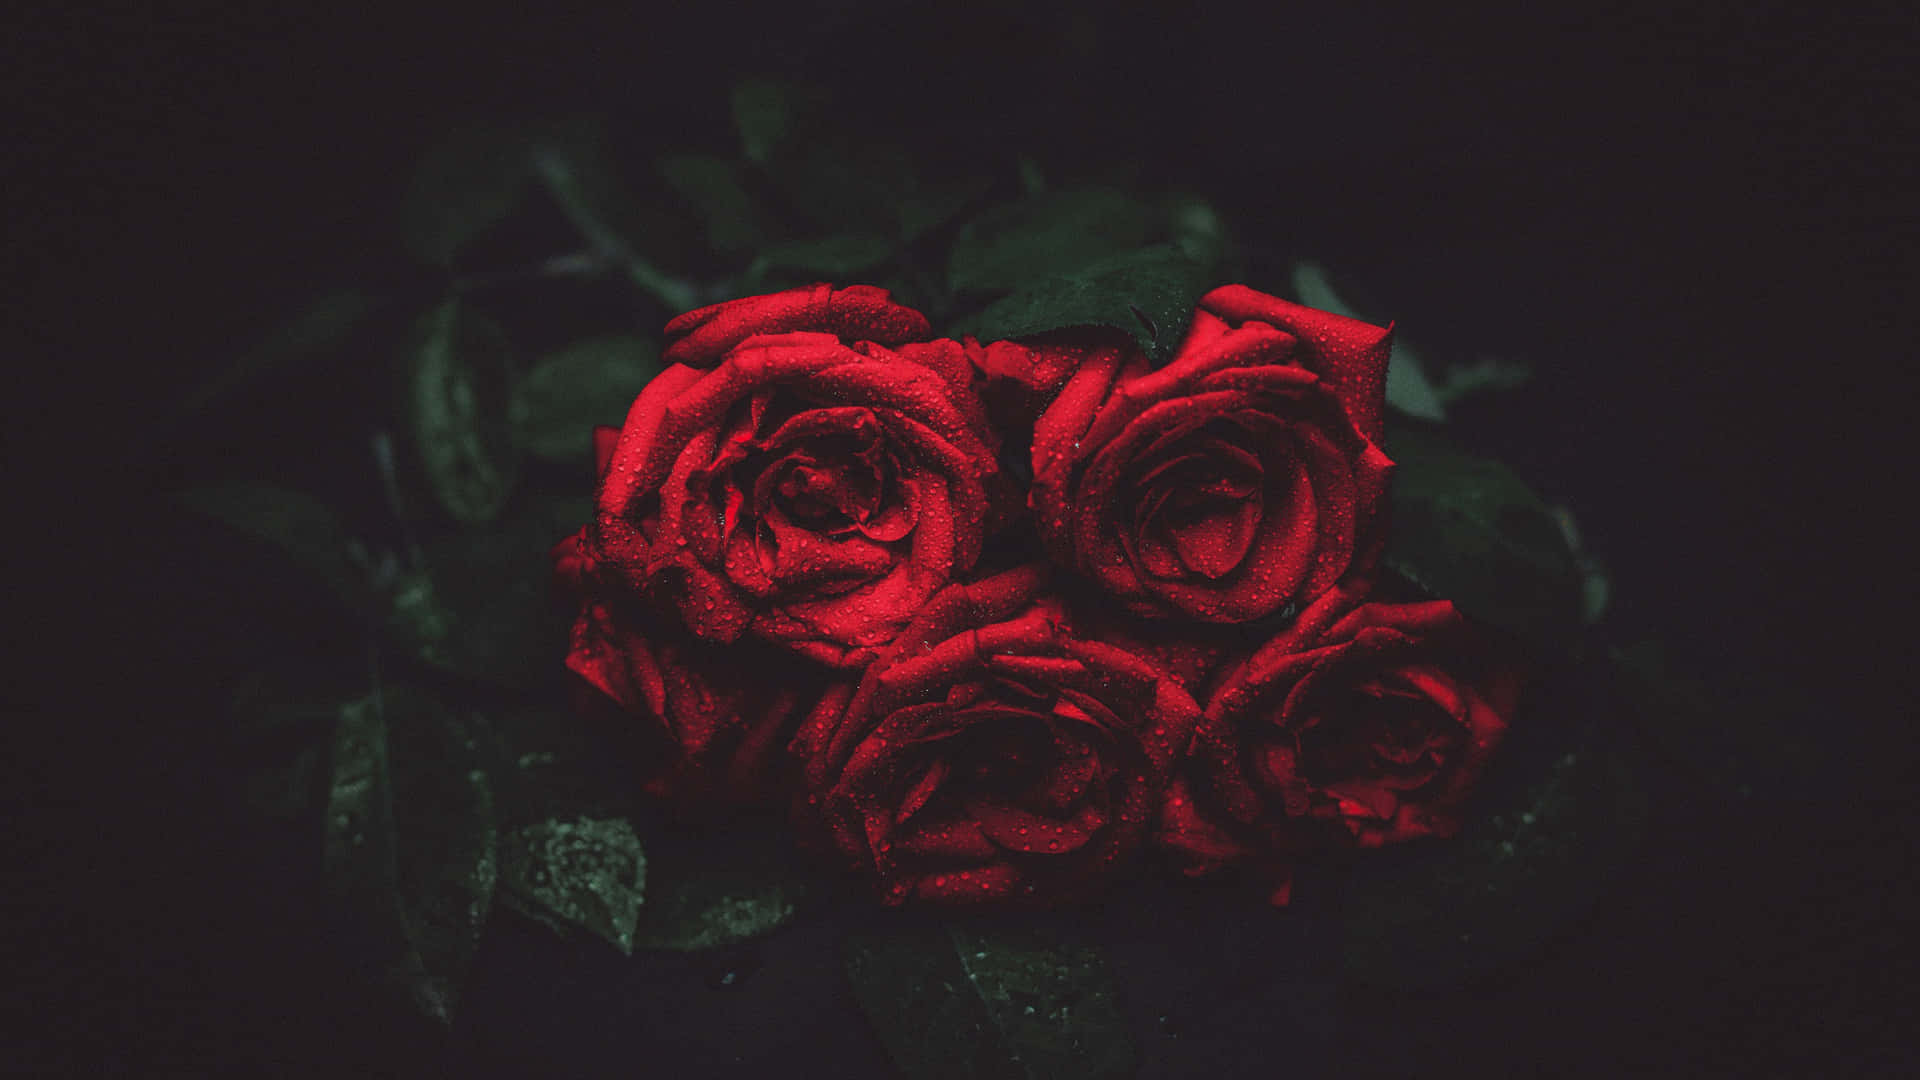 1440p Grunge Aesthetic Red Garden Roses Background